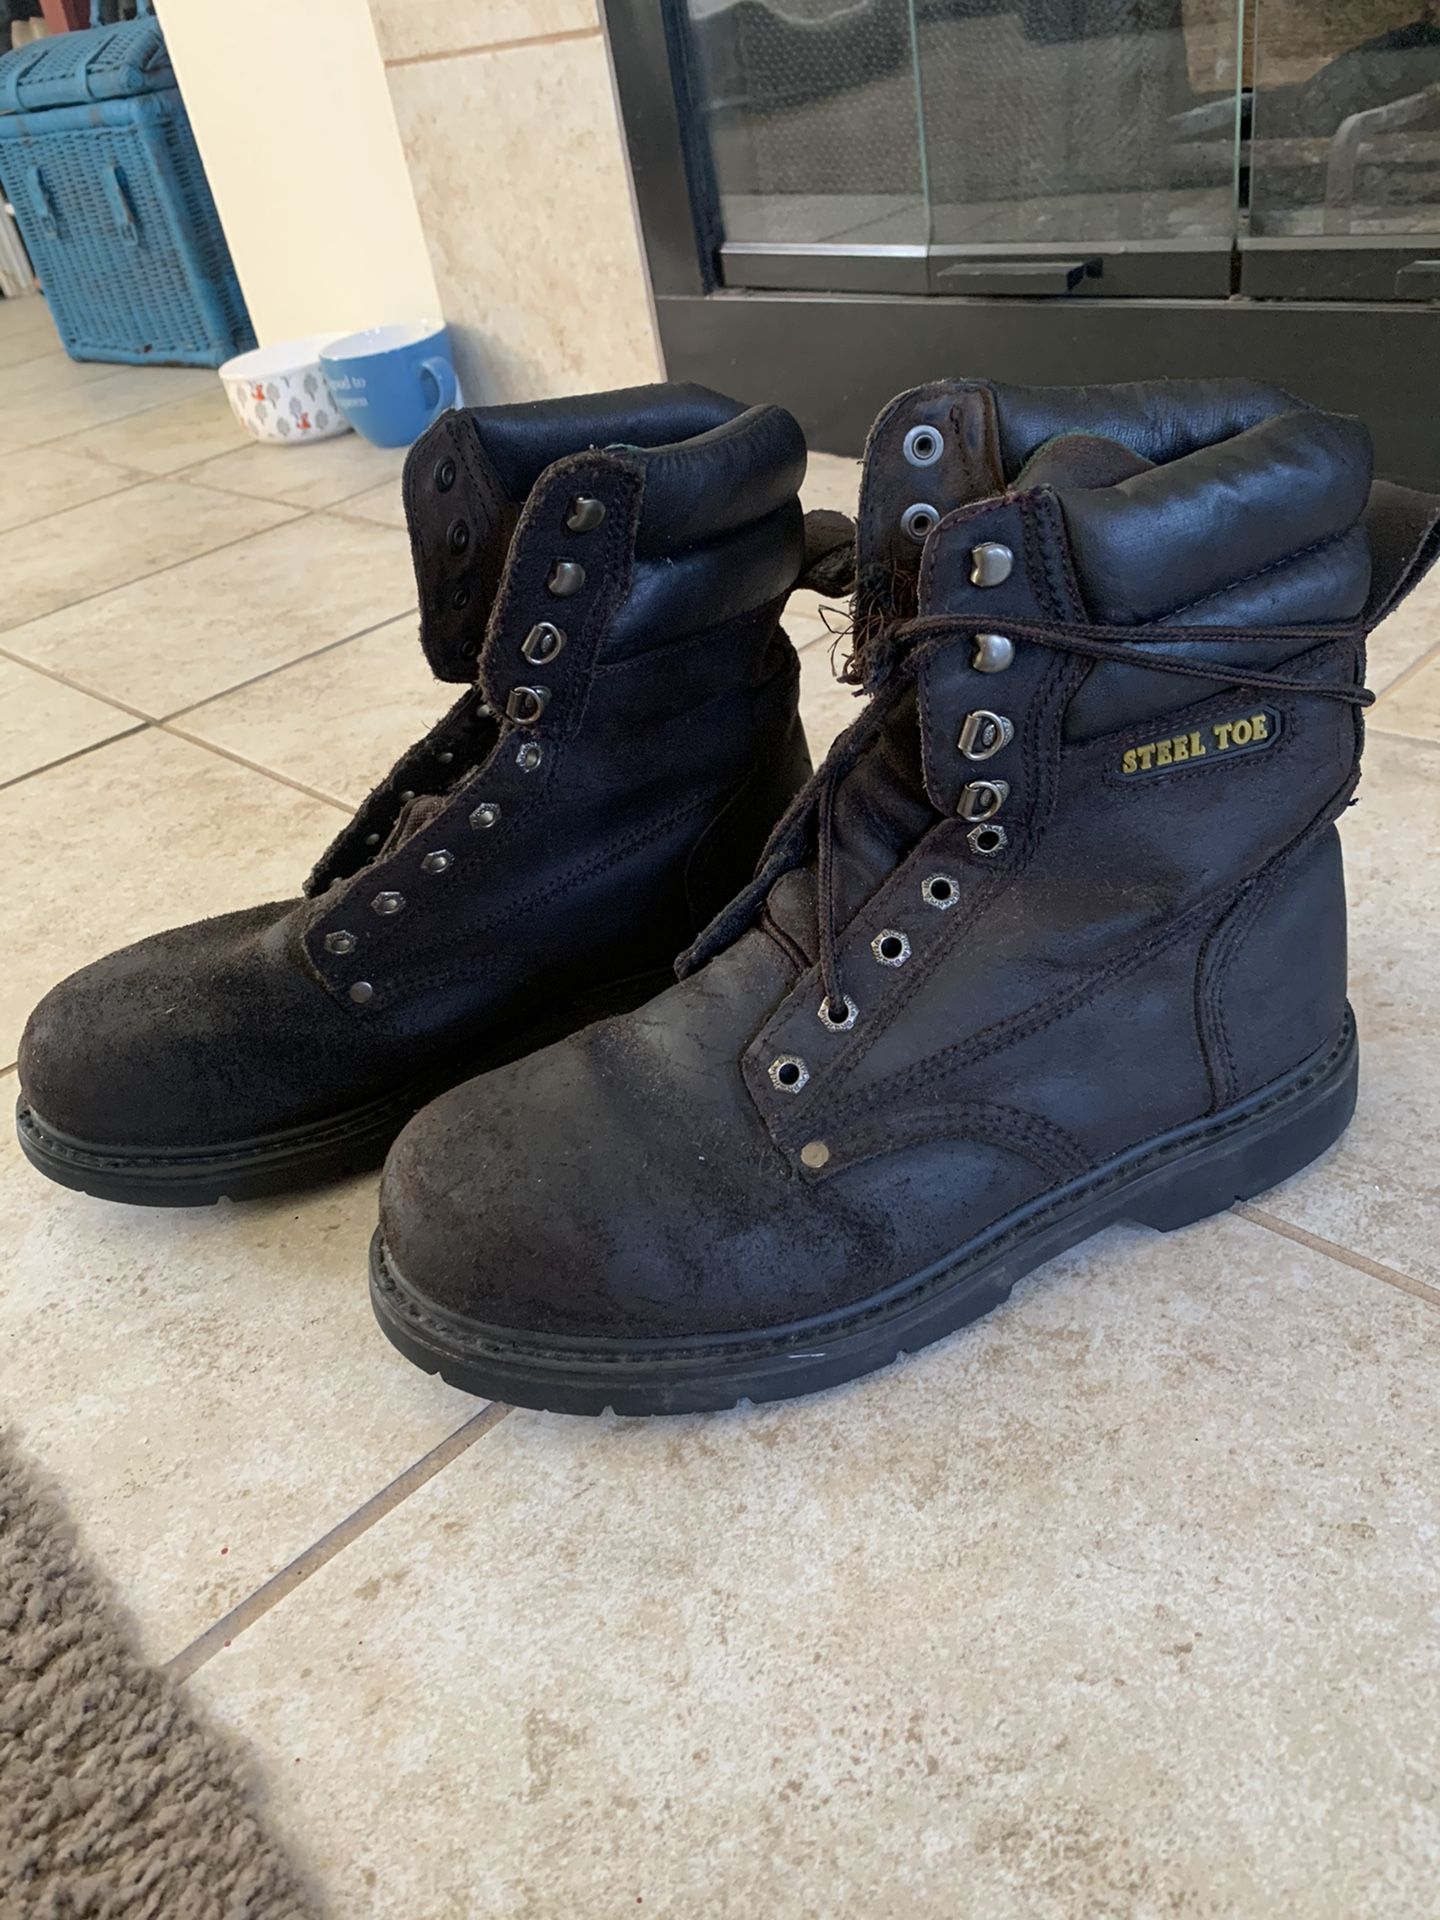 Steel Toe work boots